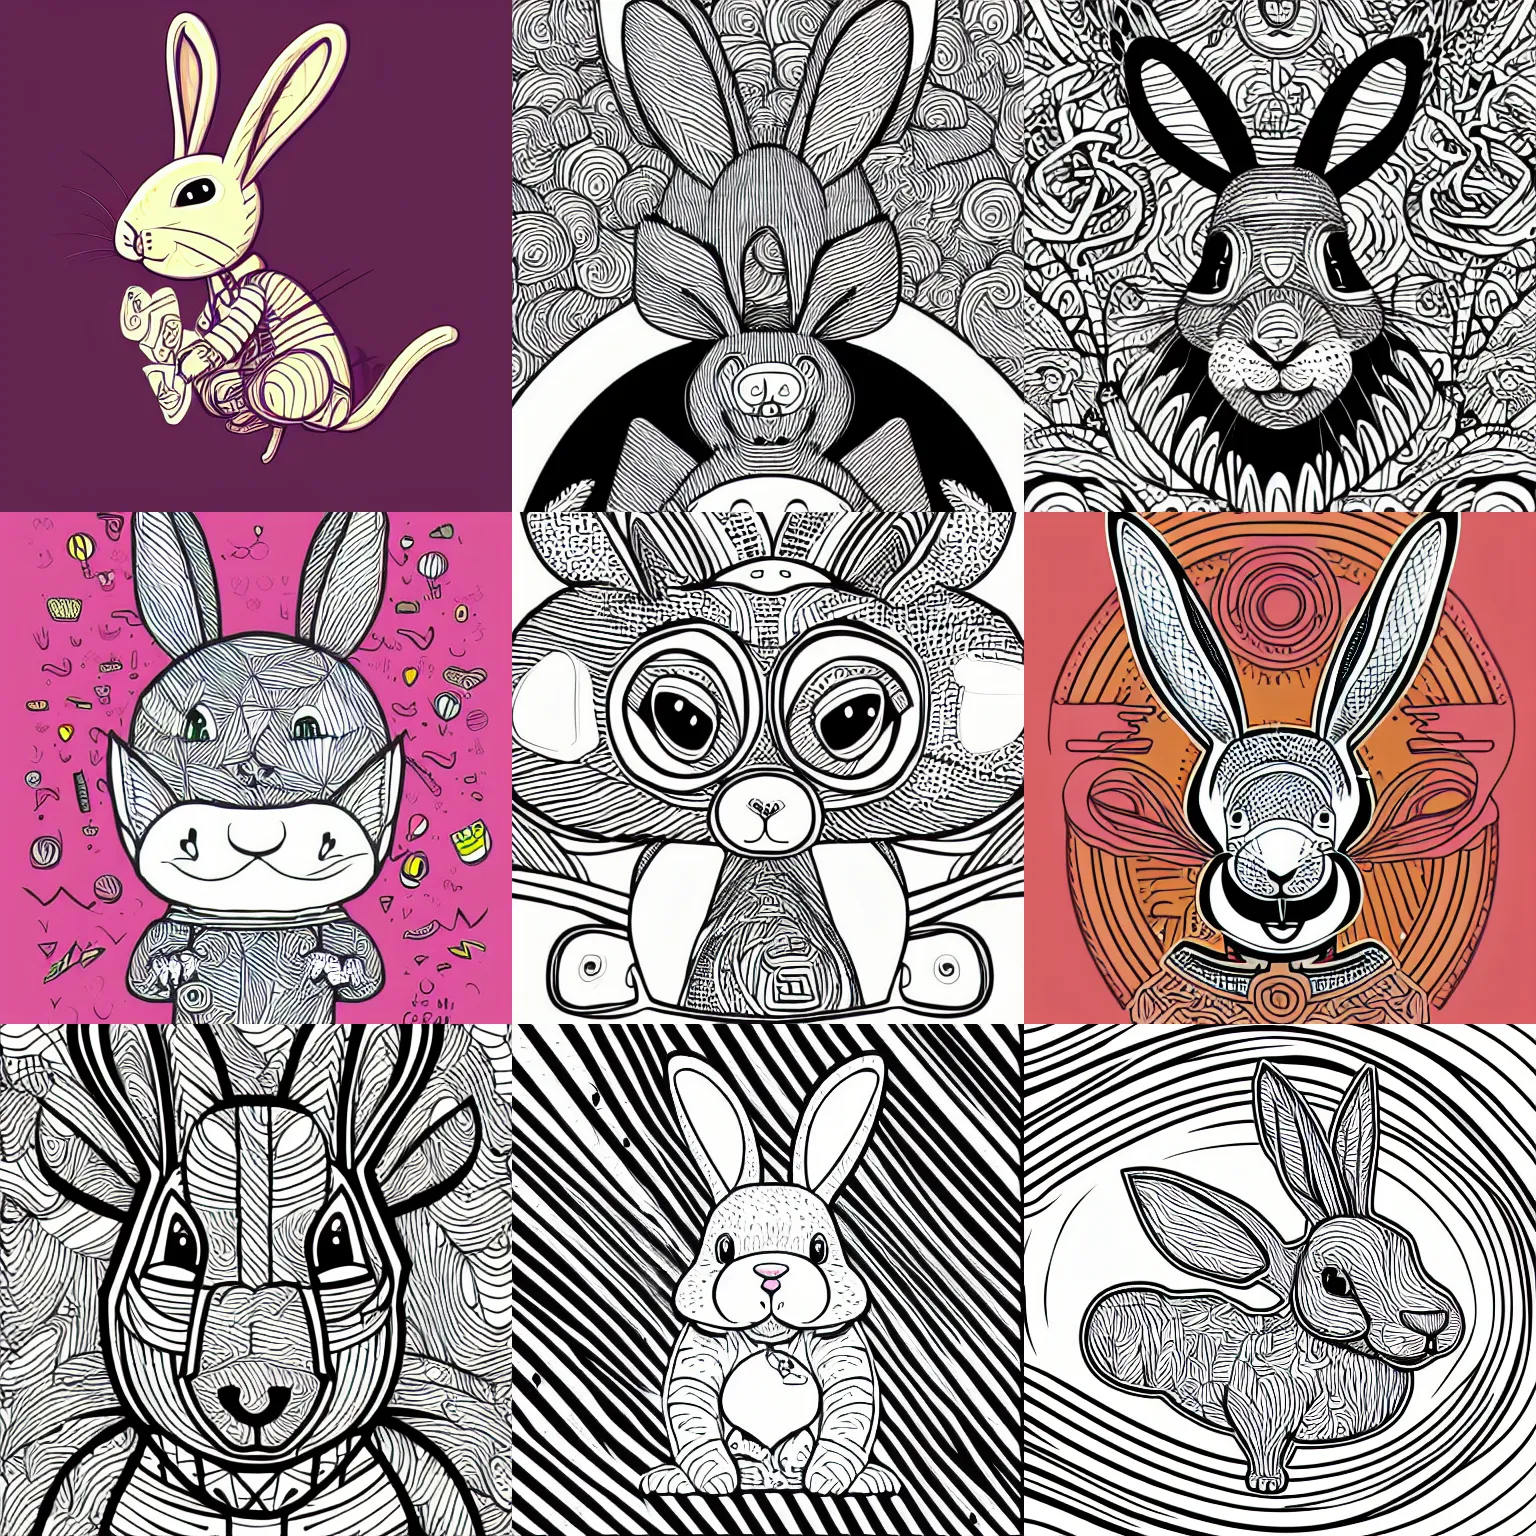 Mad rabbit by Eldstudio on Dribbble